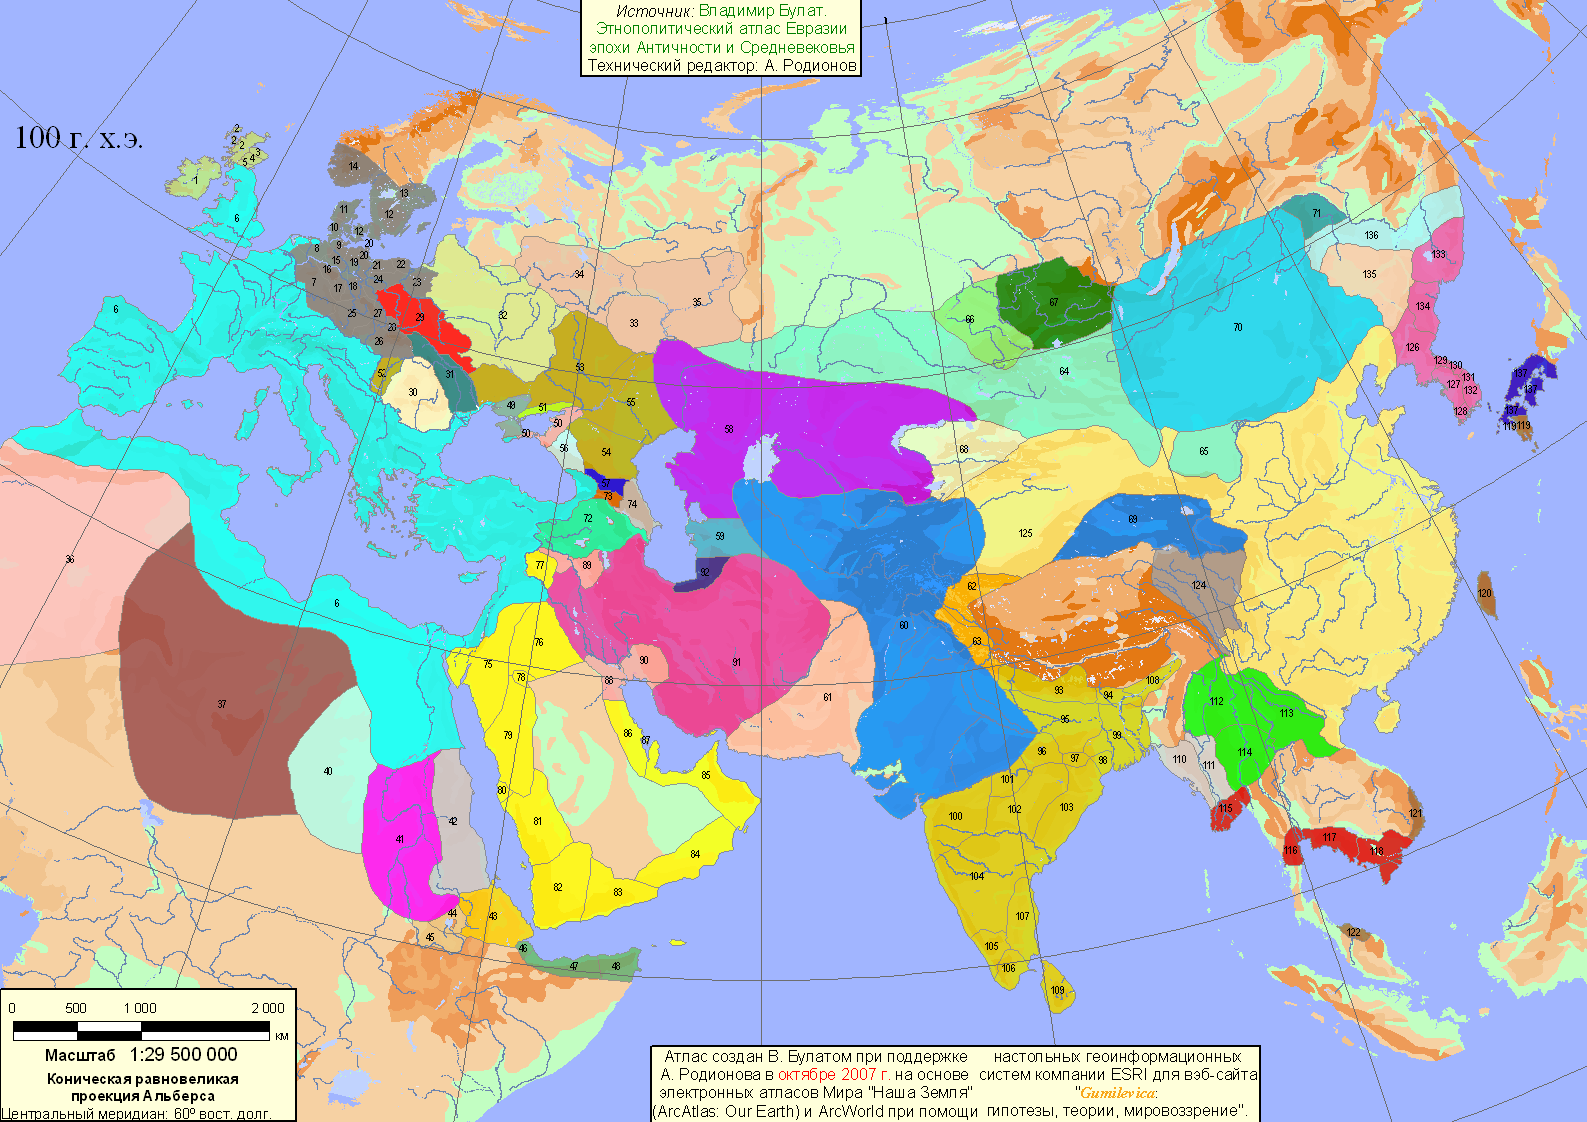 Eurasia - 100 AD (310 Kbytes)